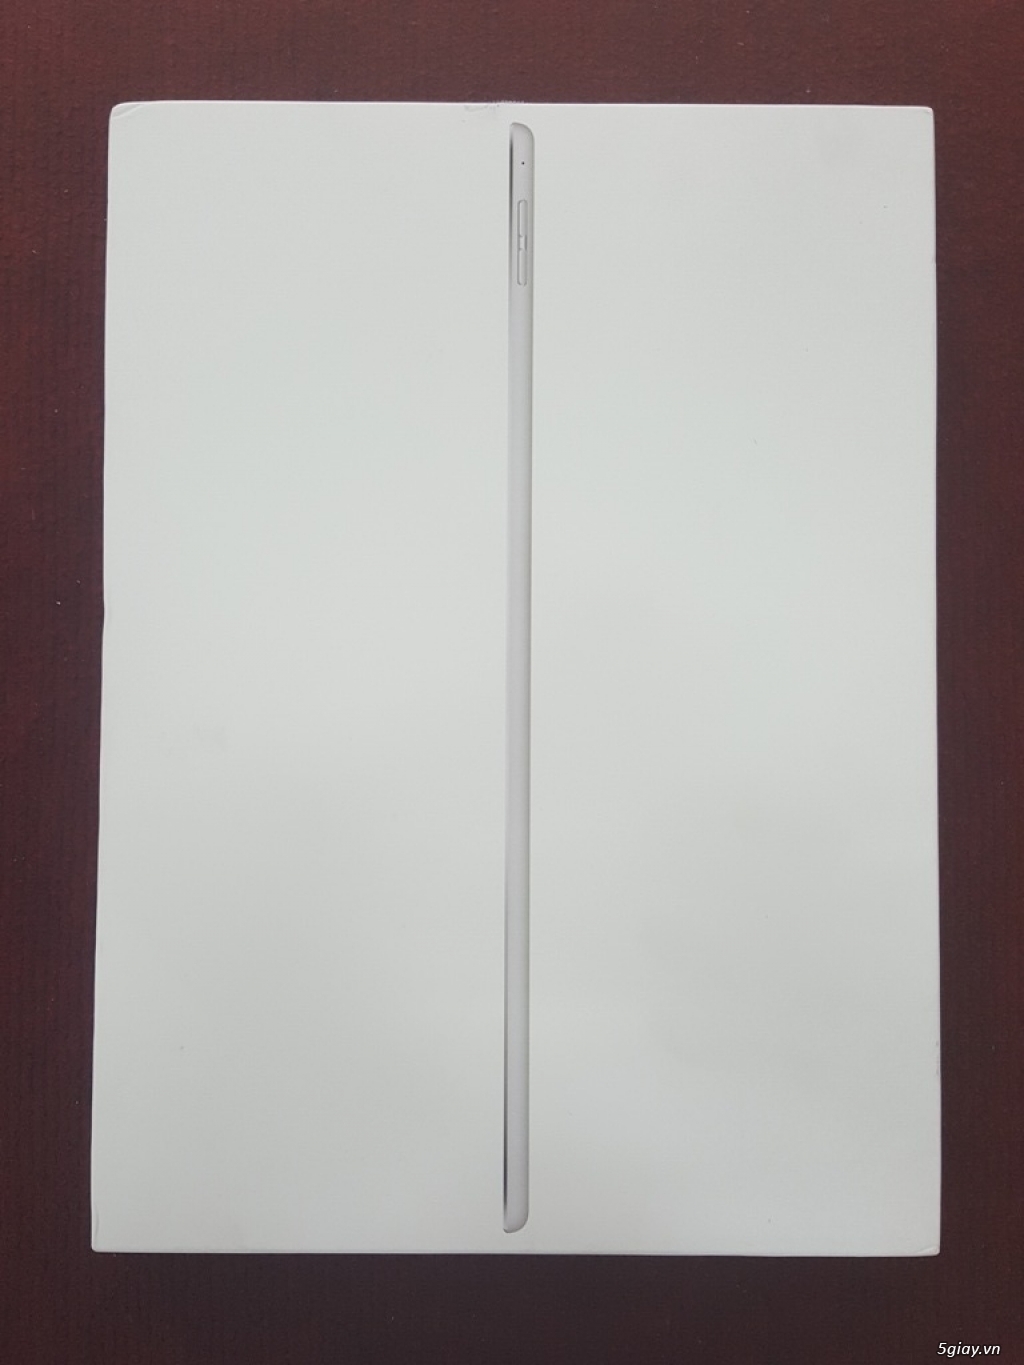 iPad Pro 12.9 - 128GB,Gray, Silver Wifi 4G - ( FULL BOX ) LIKE NEW...